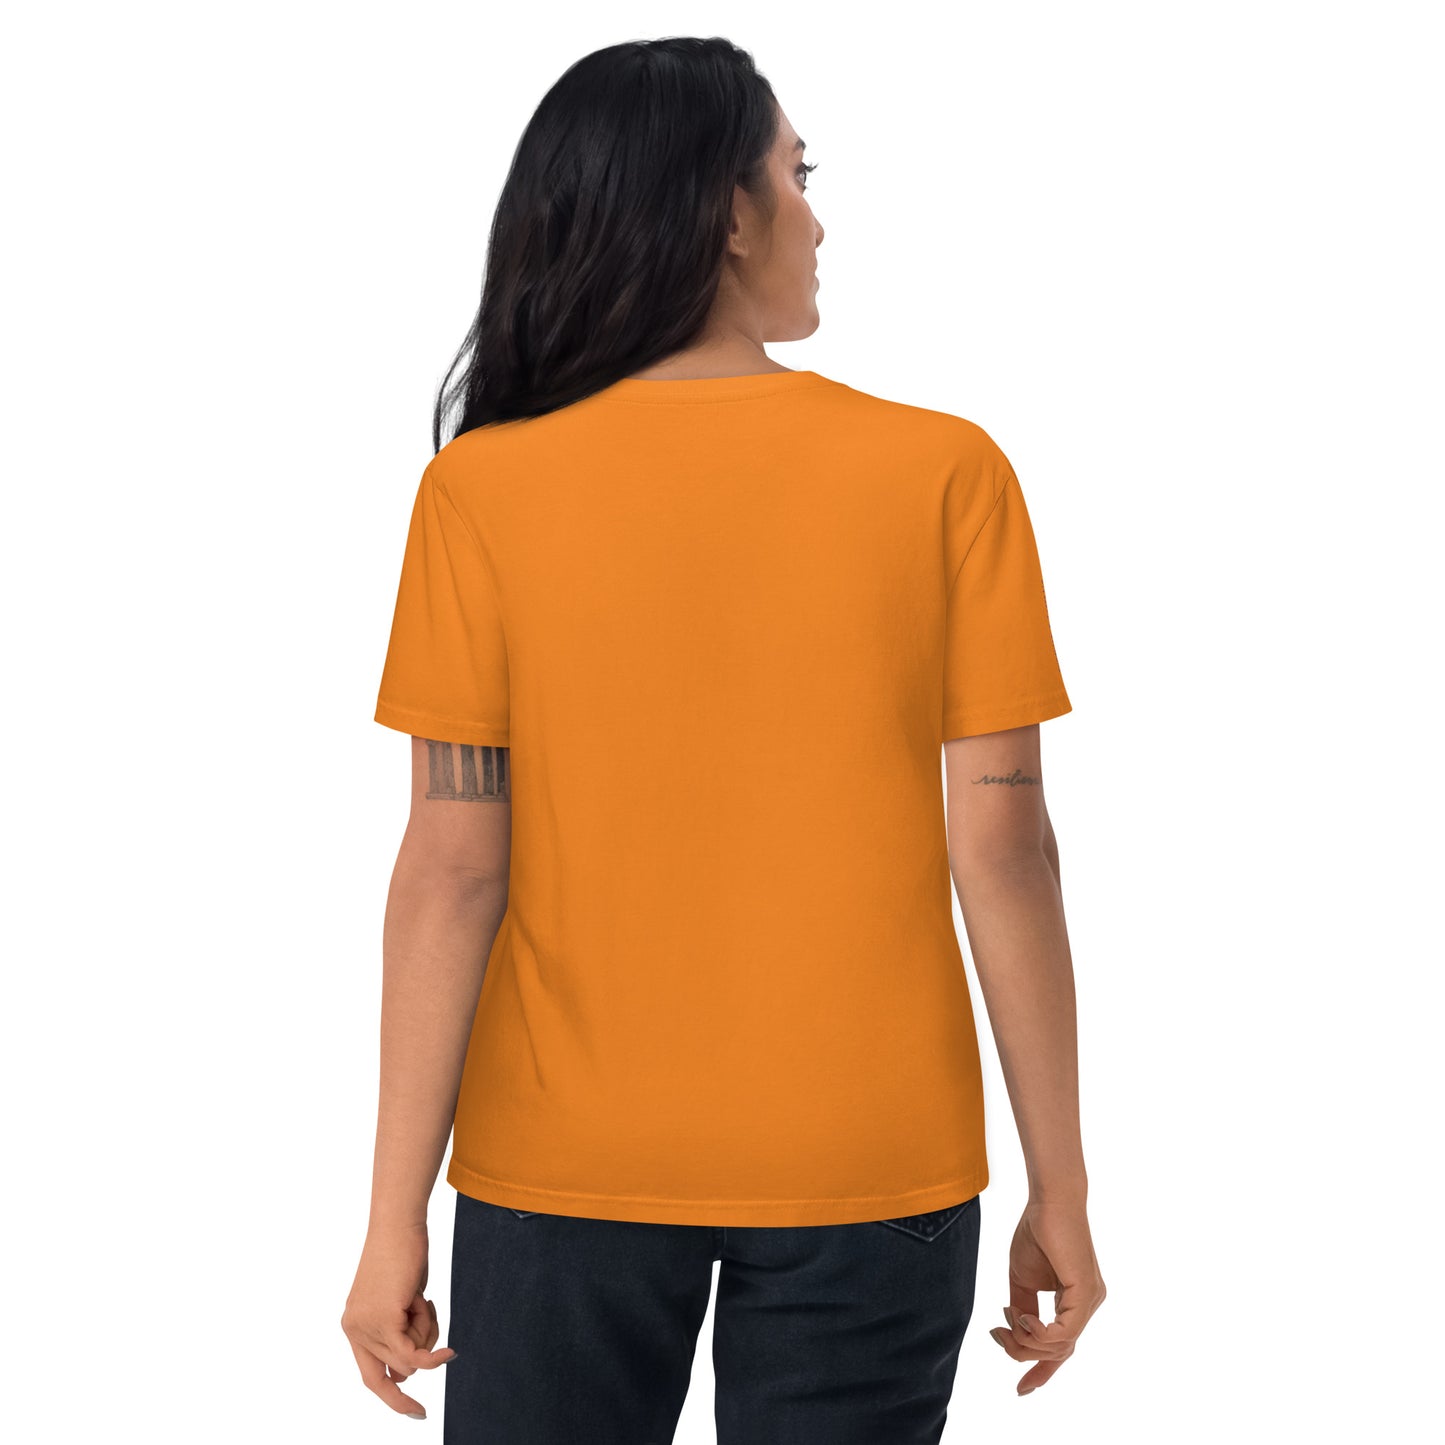 Unisex organic cotton t-shirt Orng/prple